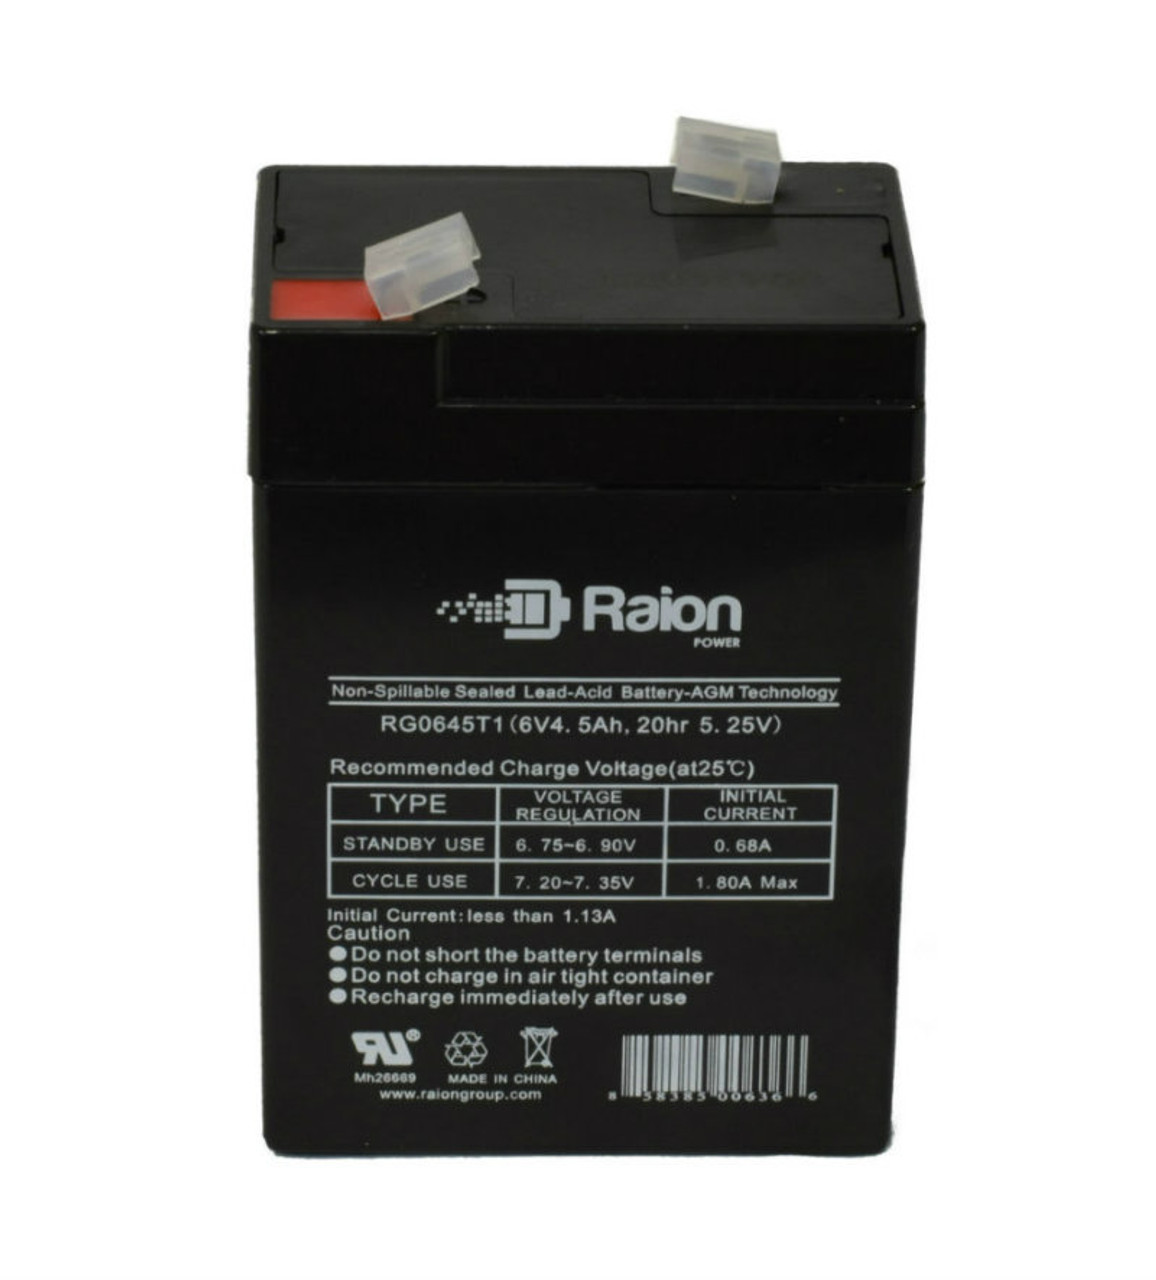 Raion Power RG0645T1 Replacement Battery Cartridge for Emergi-Lite 2VM